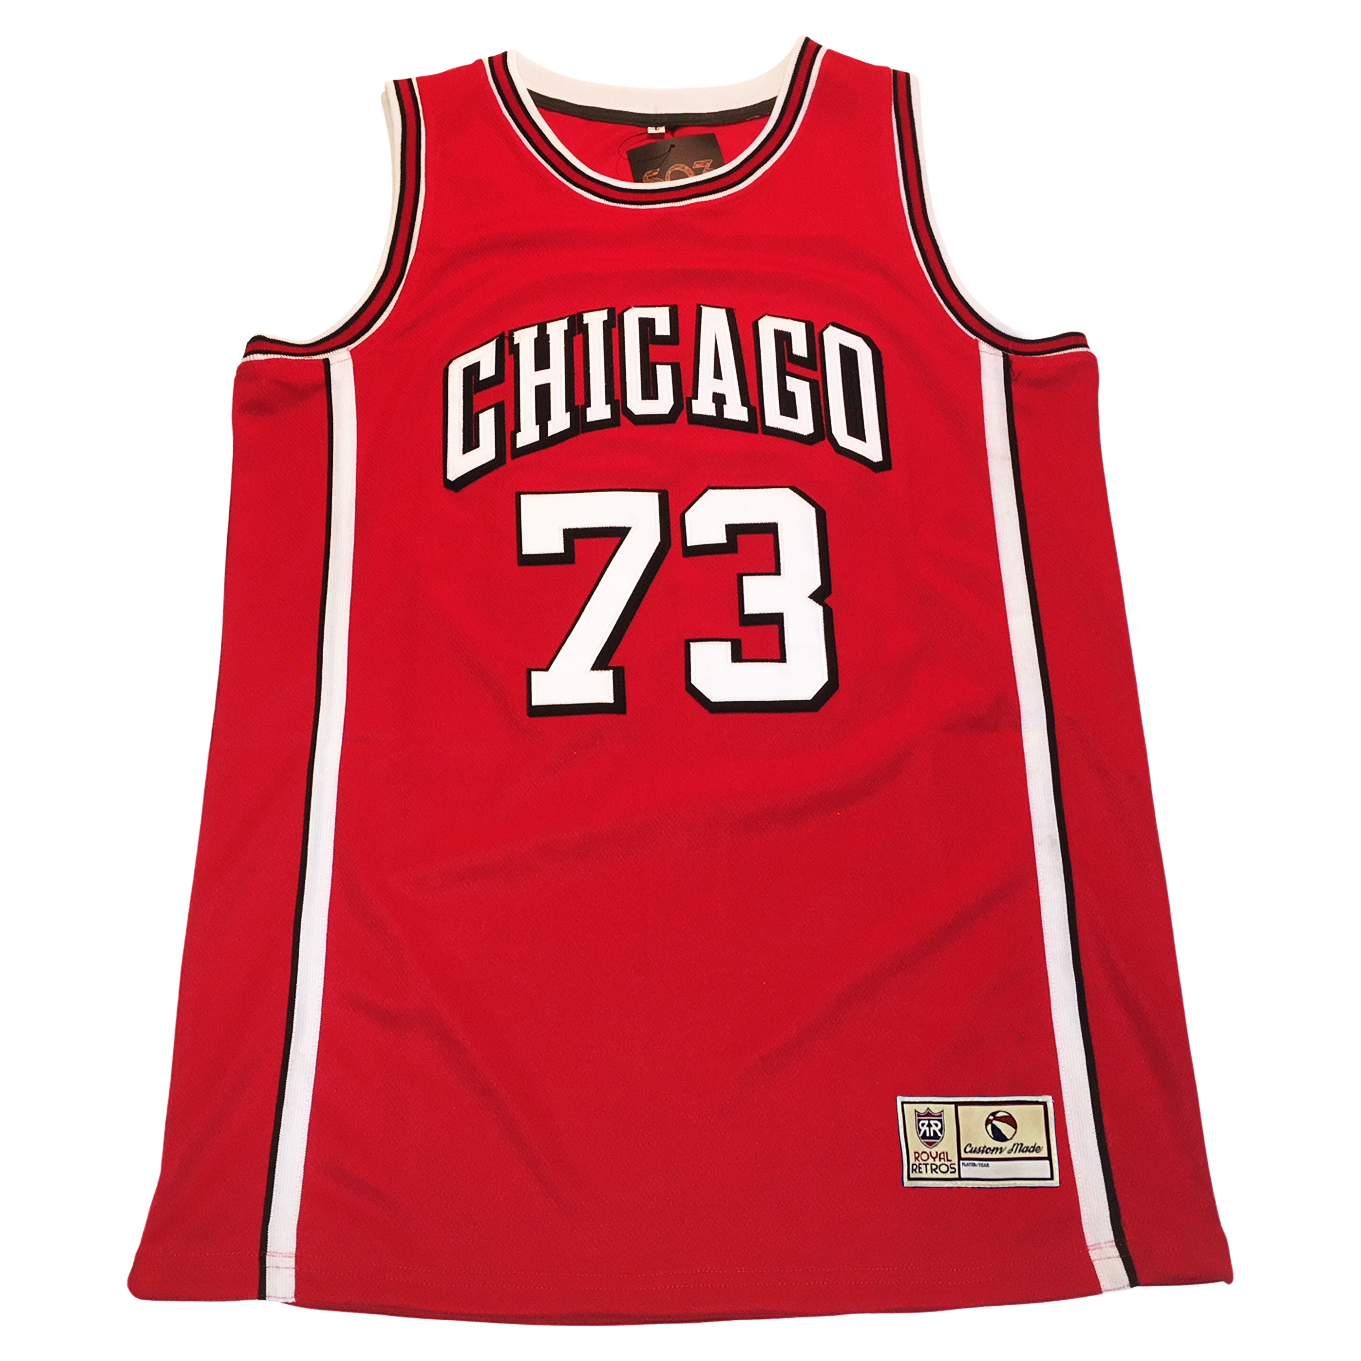 1970 chicago bulls jersey